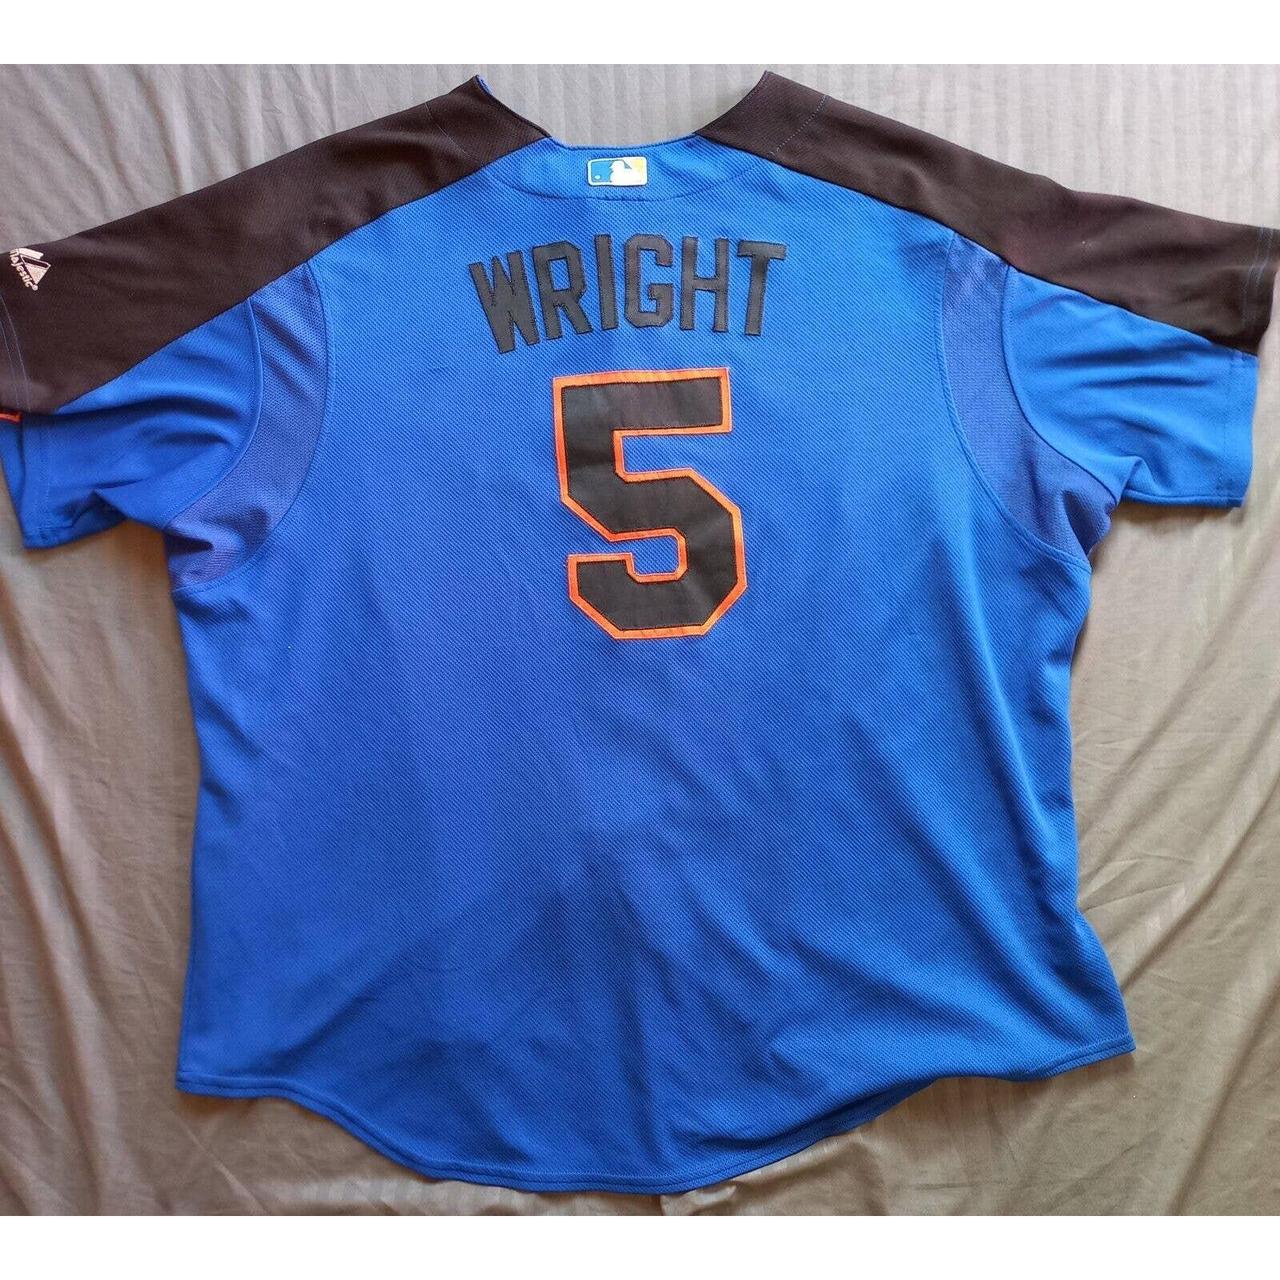 David Wright World Series MLB Jerseys for sale